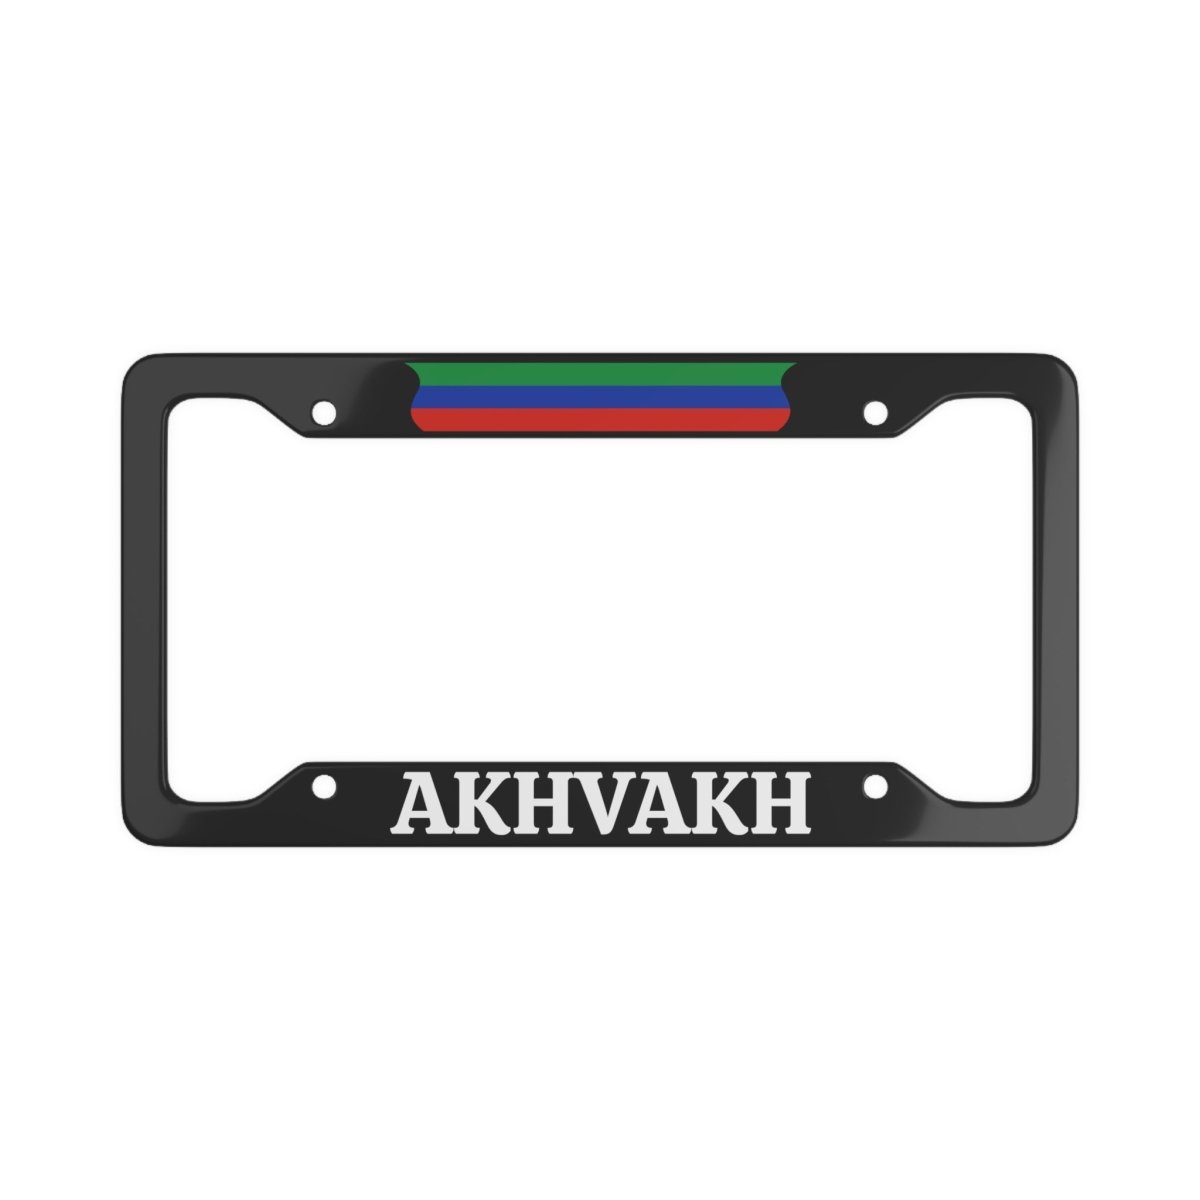 Akhvakh License Plate Frame - Cultics